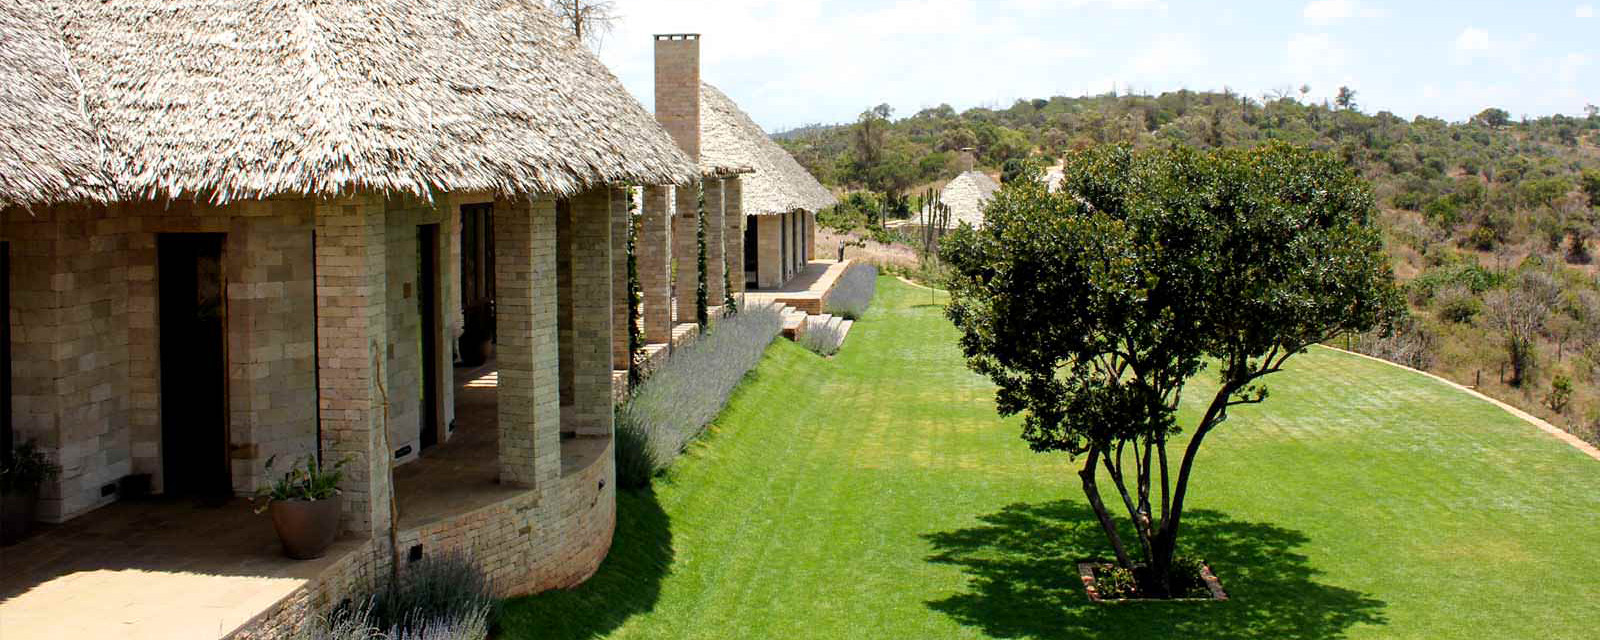 Exklusive Safari Kenia - Sirai House